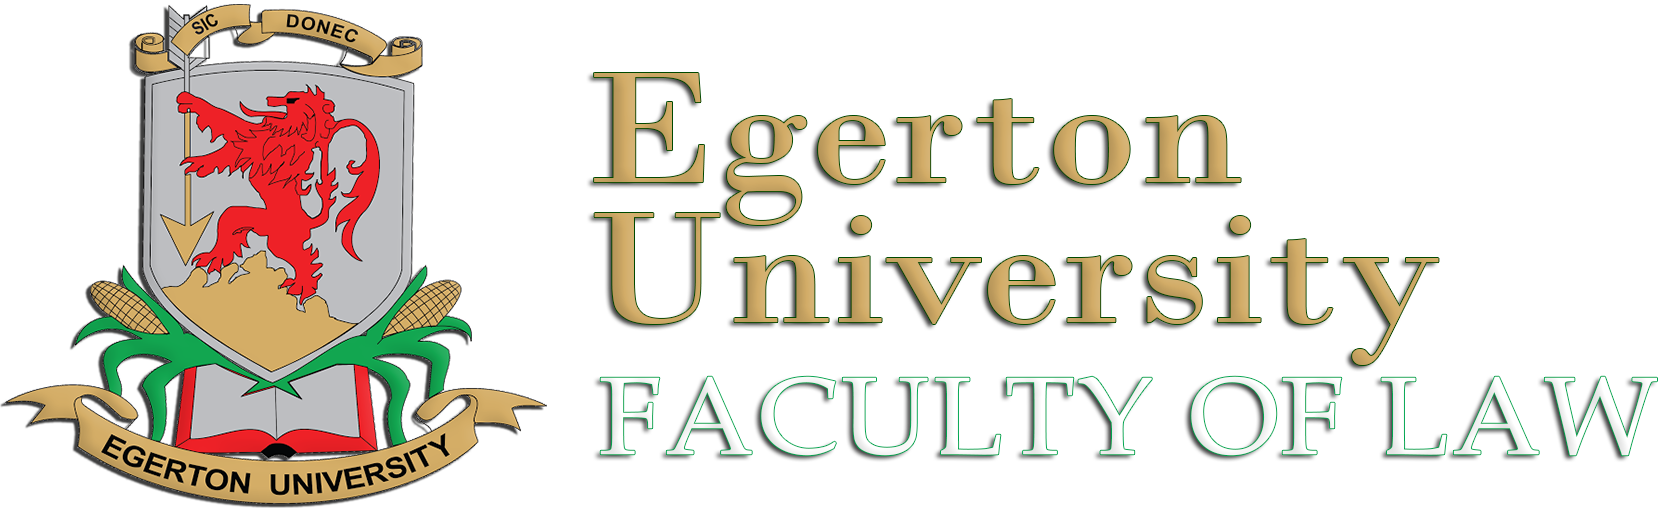 Egerton University Faculty of Law